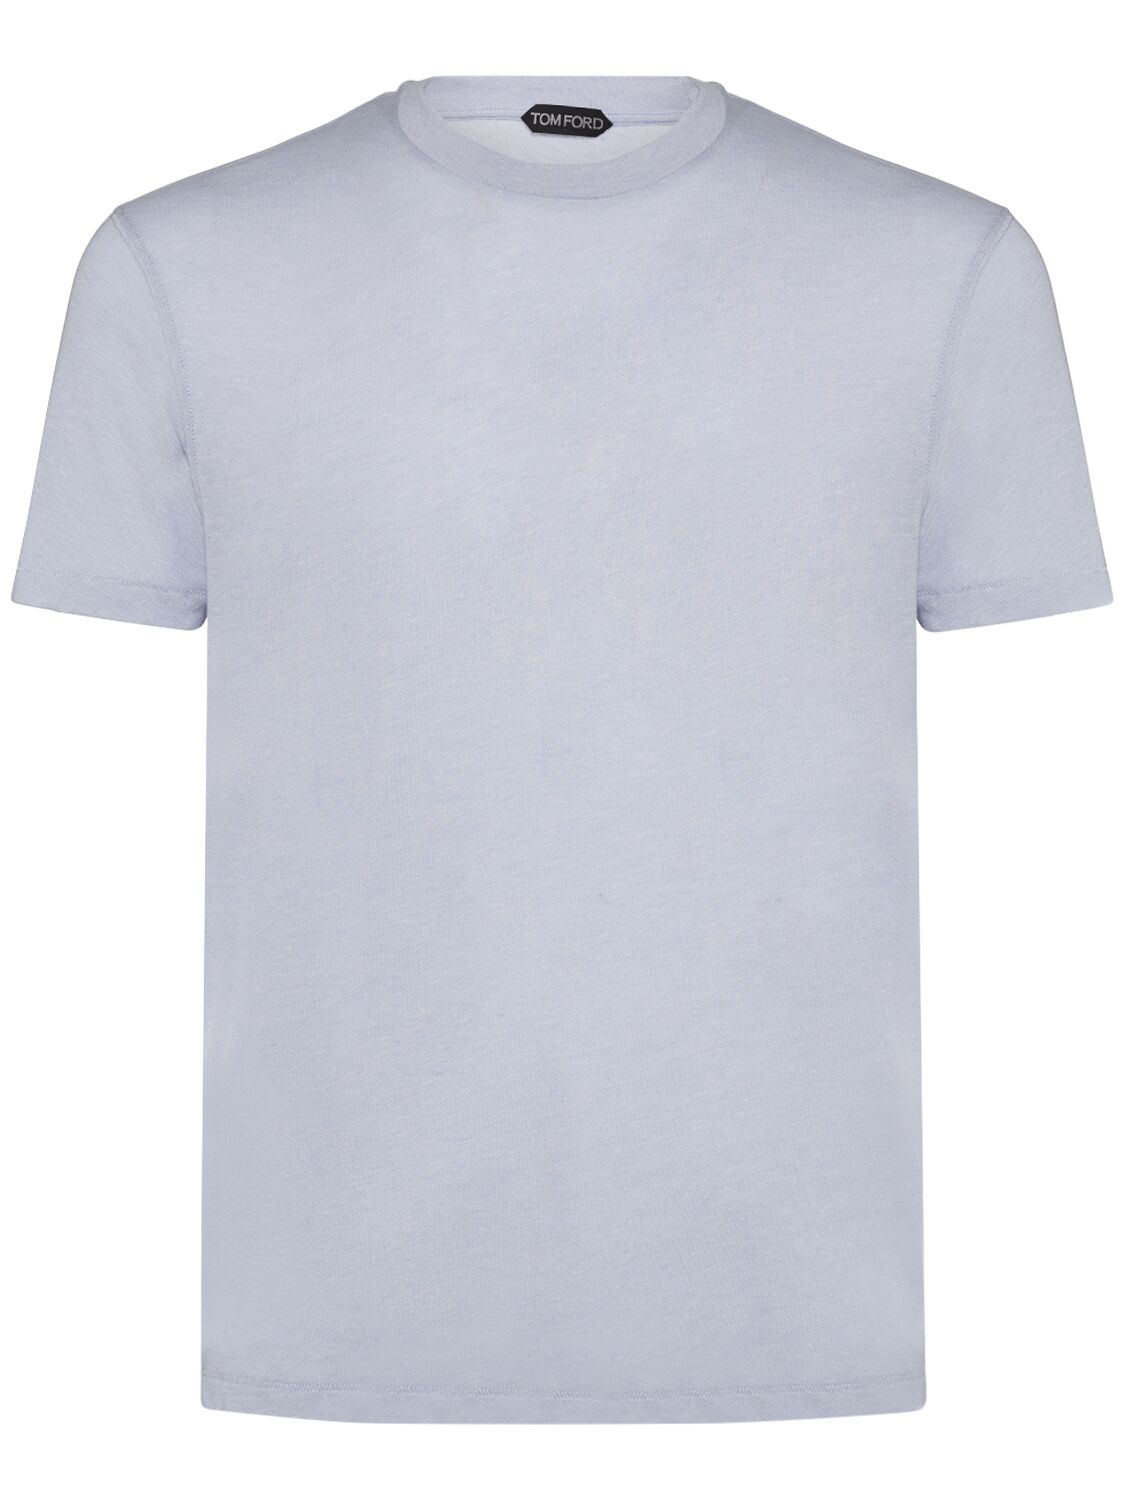 Tom Ford Cotton Blend Crewneck T-shirt In Sky Blue